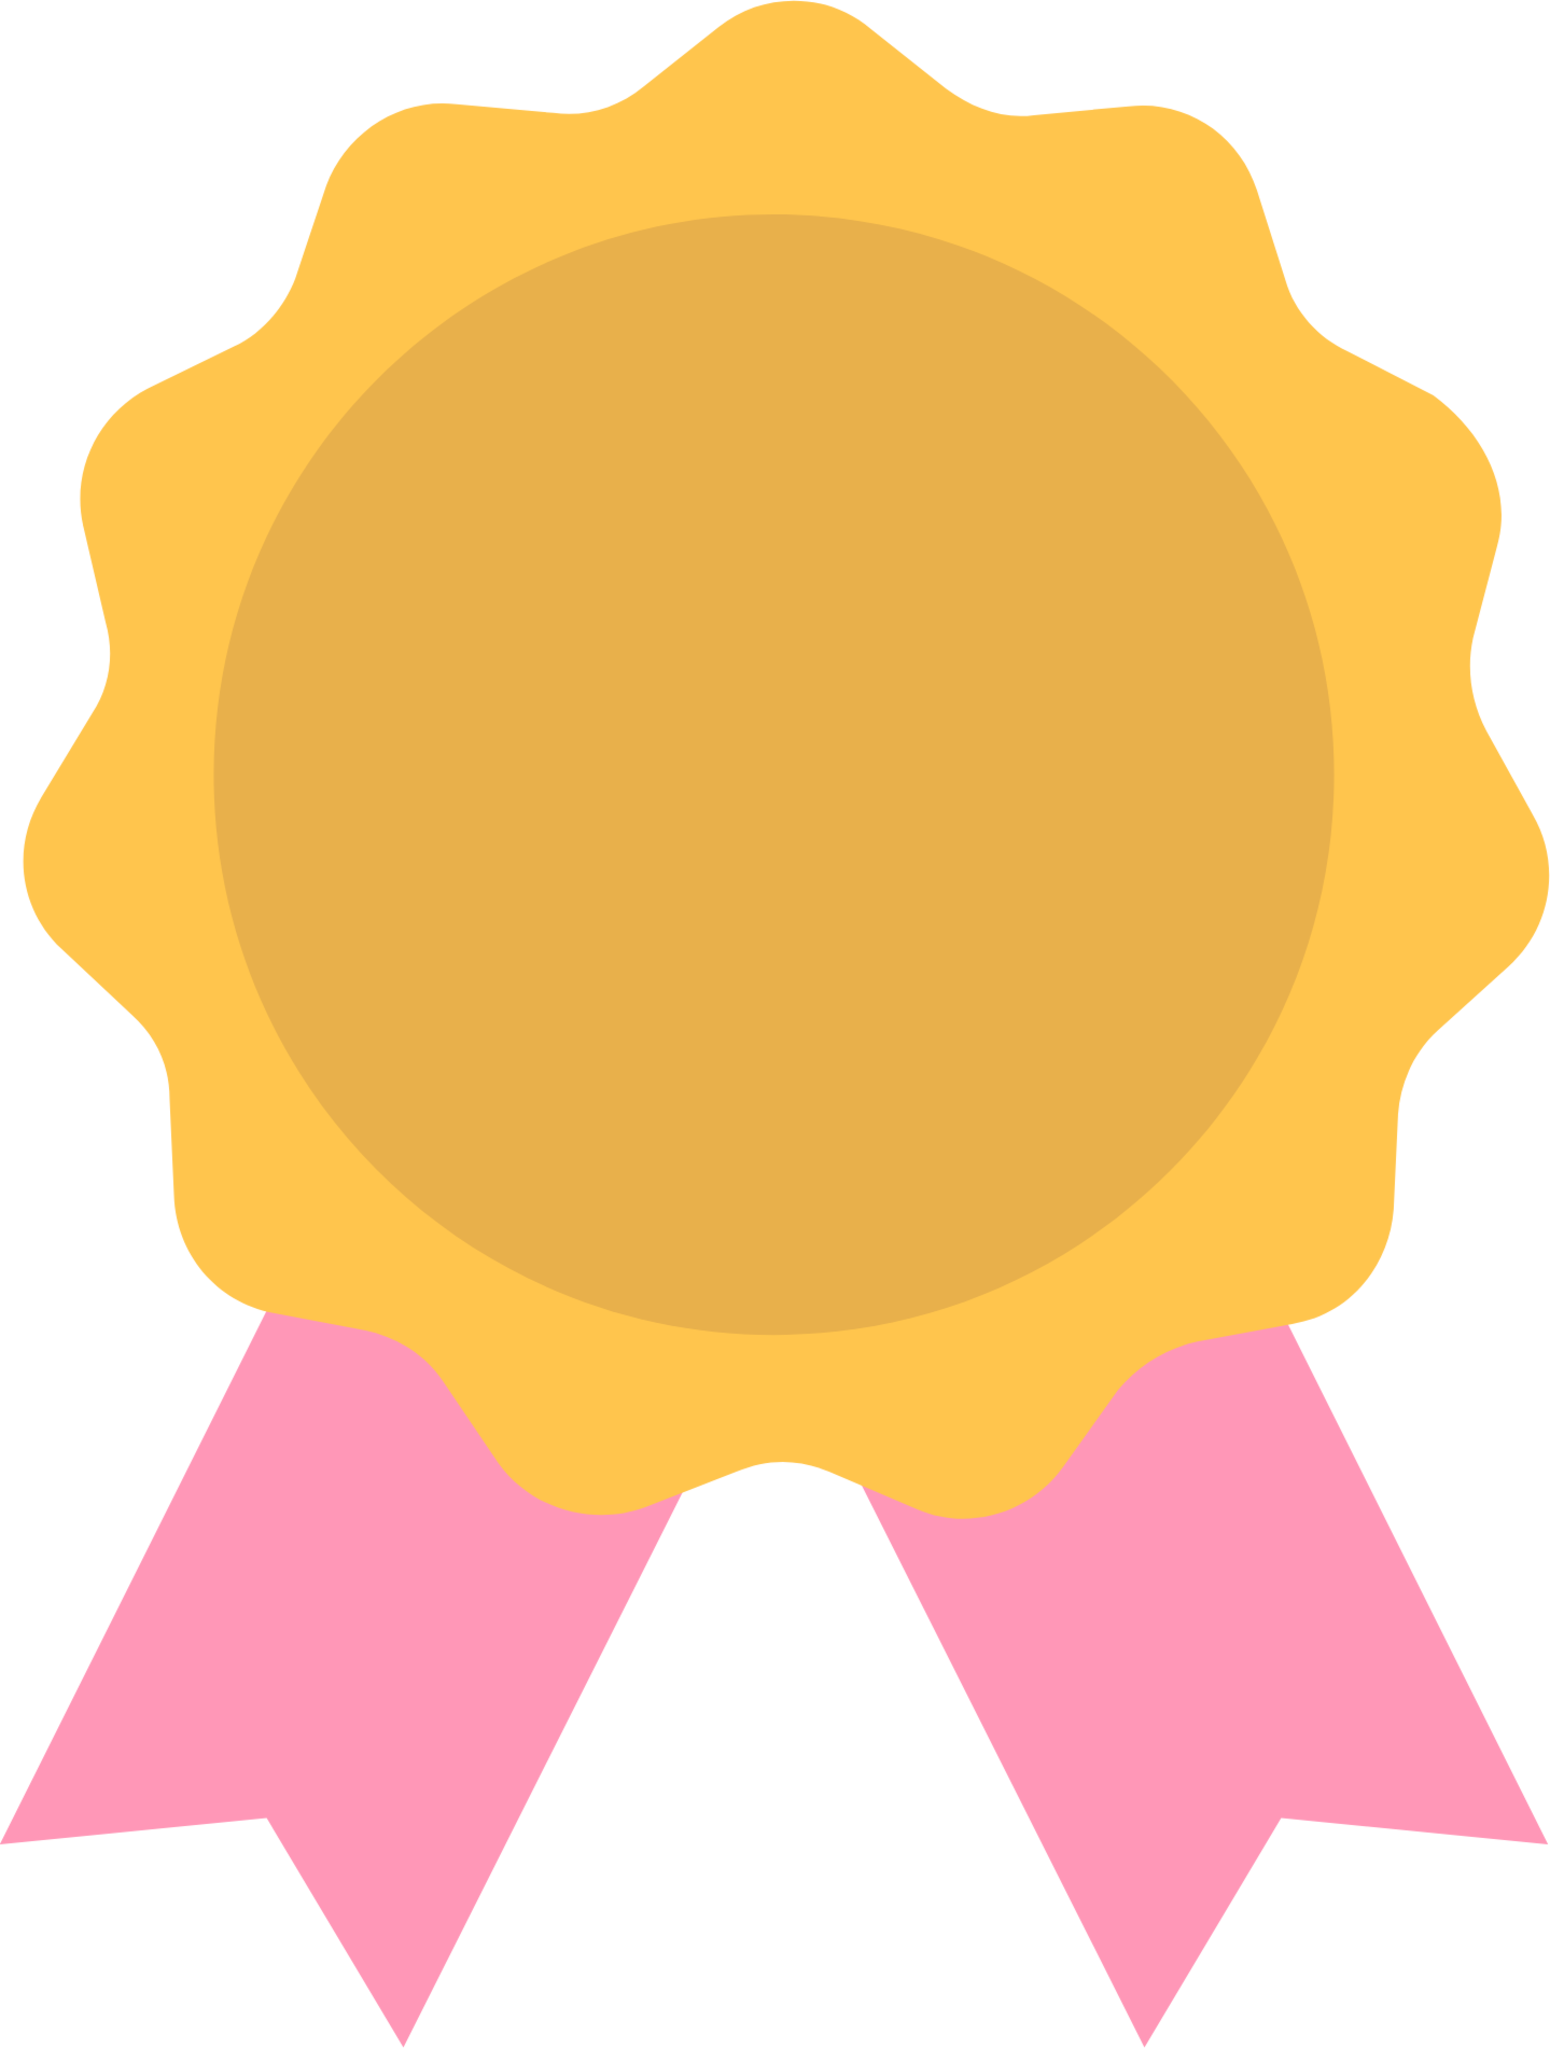 award medal badge icon